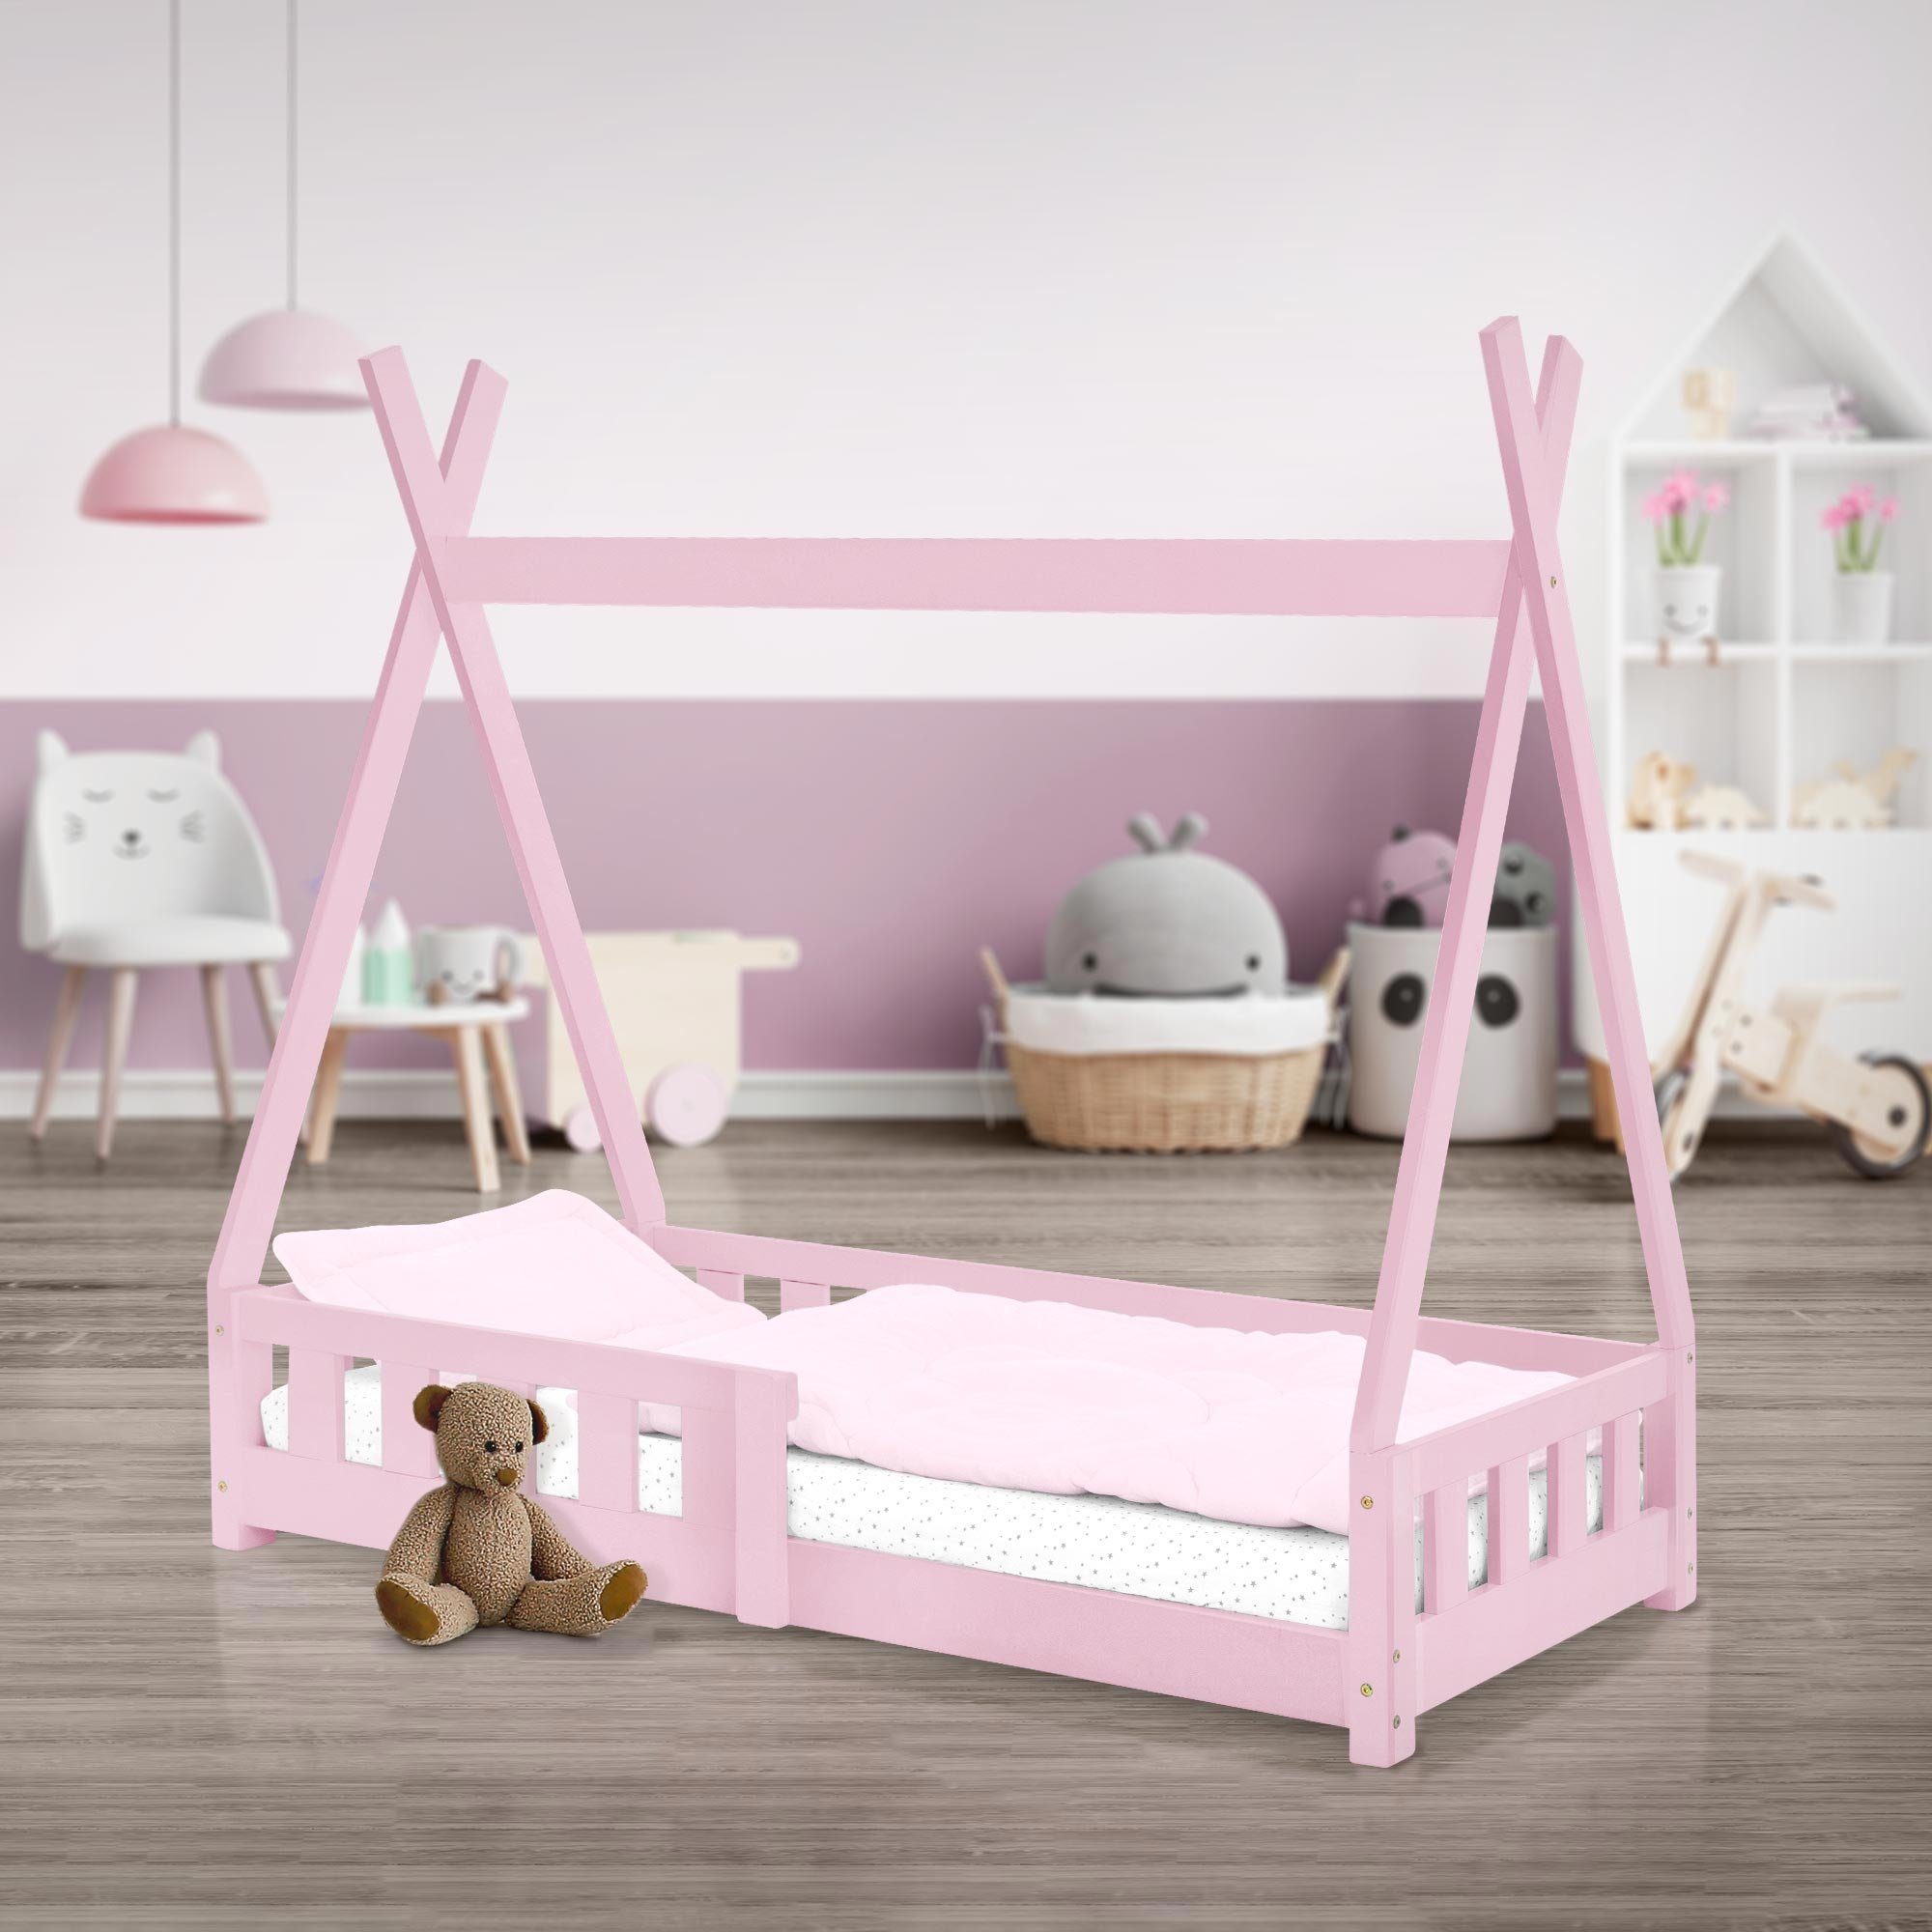 ML-DESIGN Kinderbett Hausbett mit Rausfallschutz und Lattenrost Massivholz, Bett 70x140 Rosa aus Kiefernholz Spielbett Zelt mit Zaun